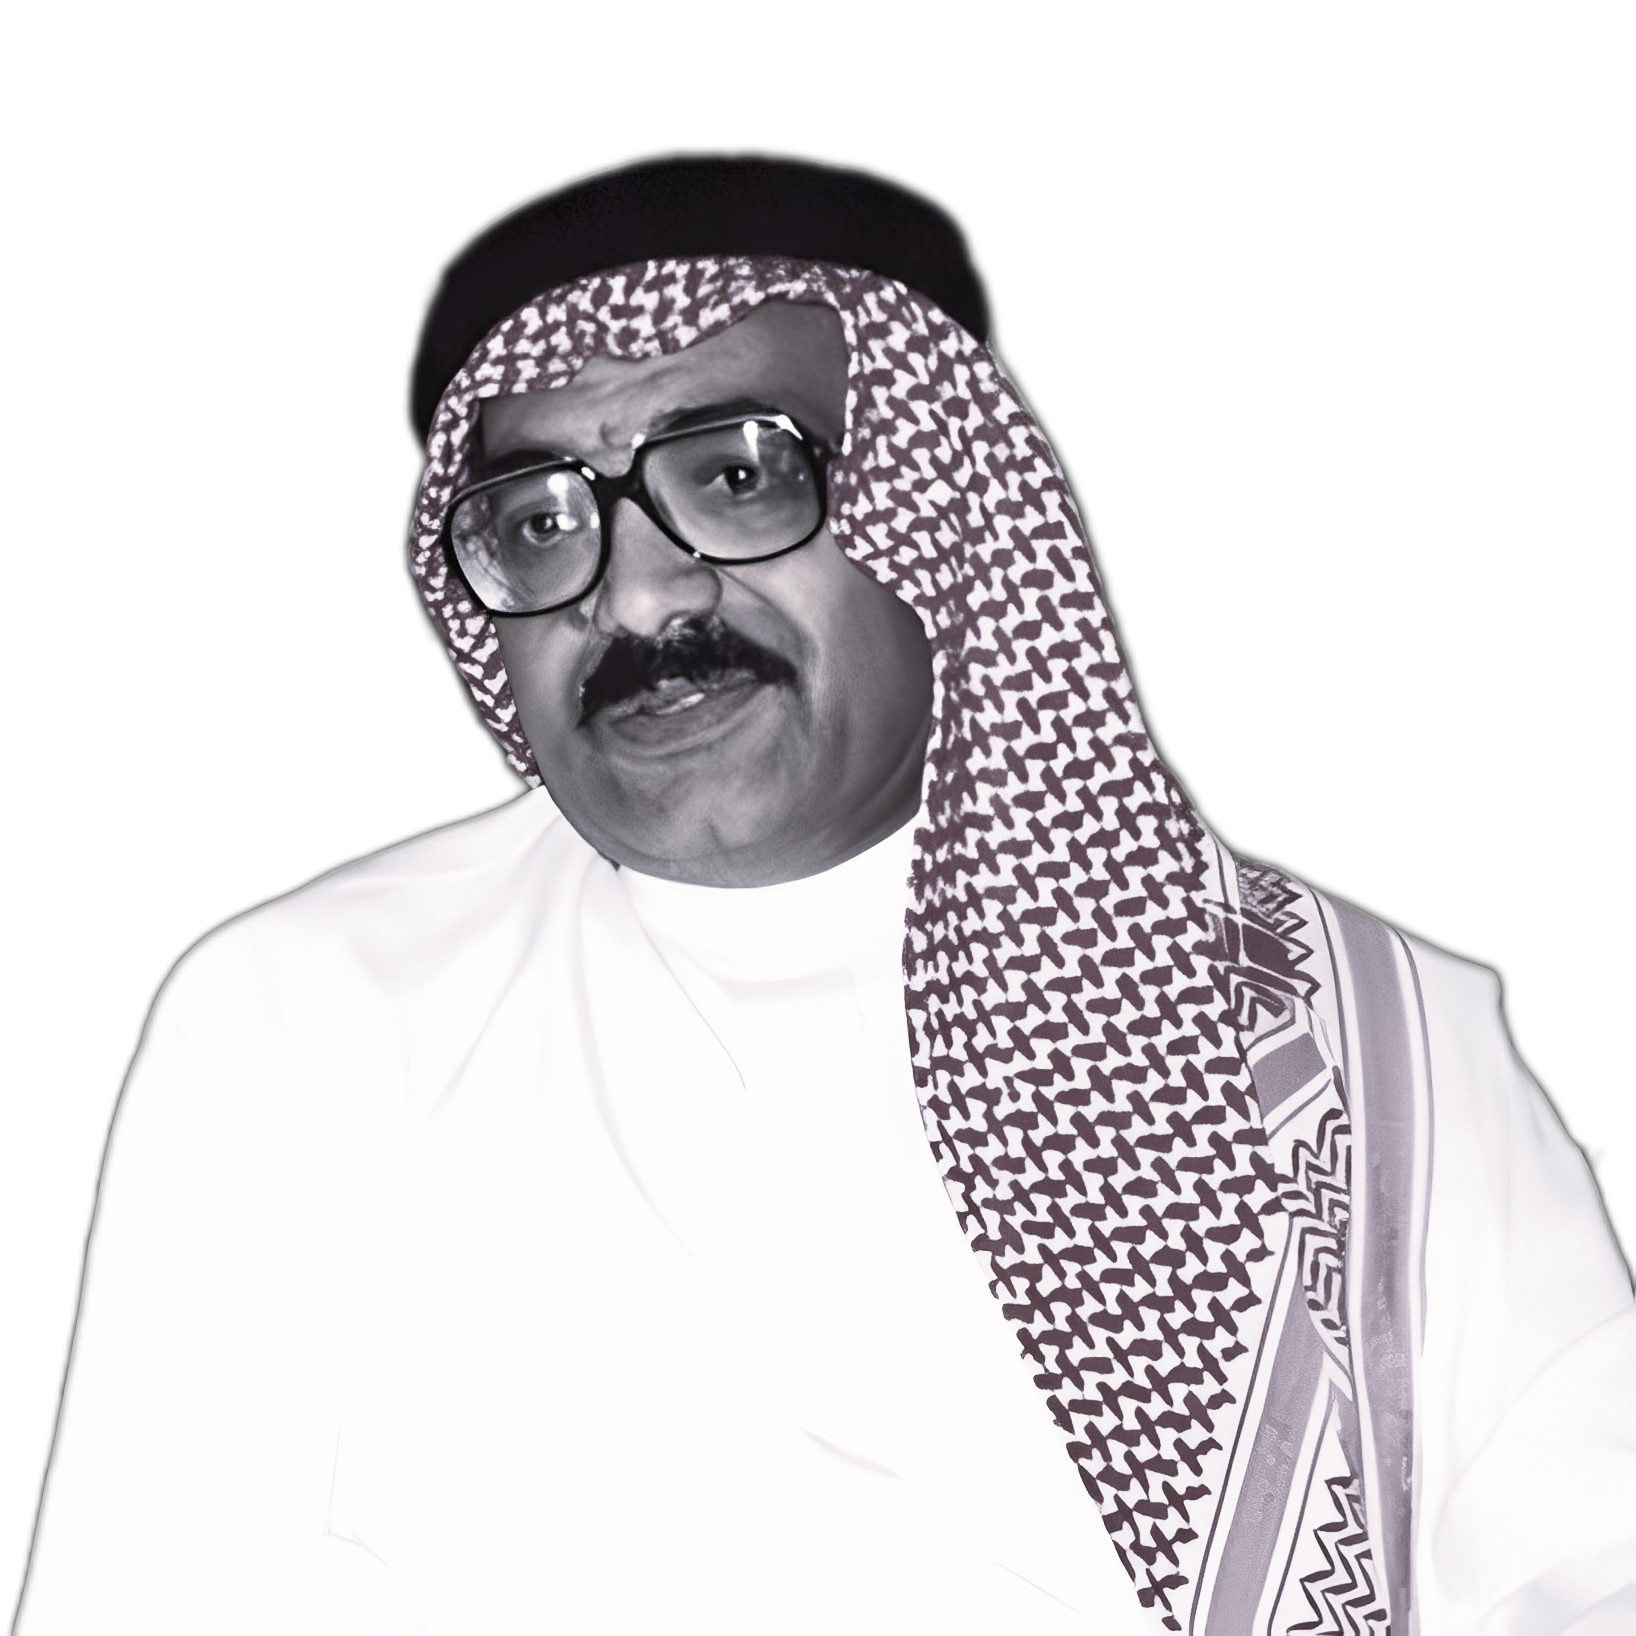 Abdulhalim Radwi